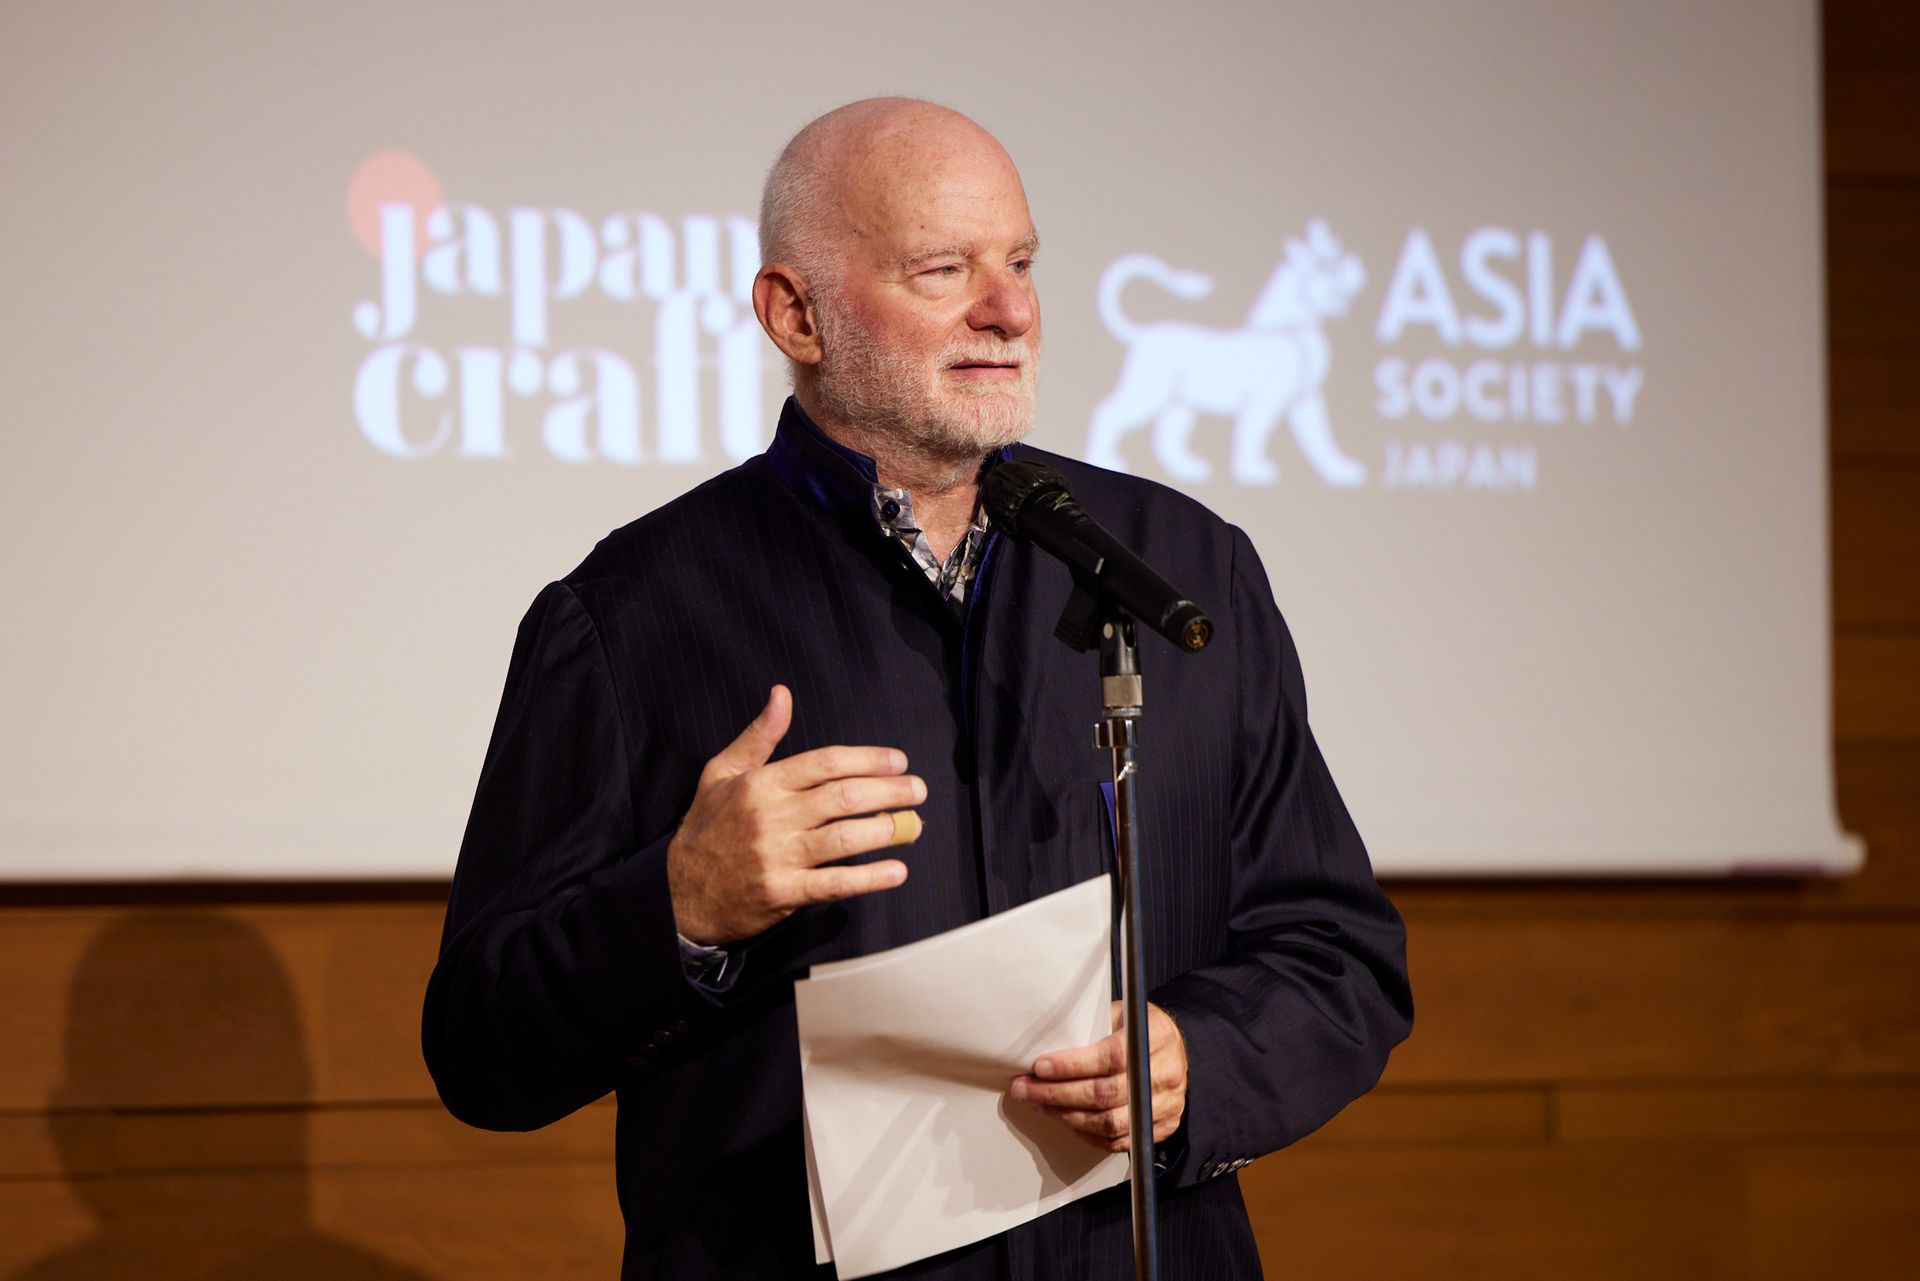 Michael W. Sonnenfeldt, Co-founder of JapanCraft21